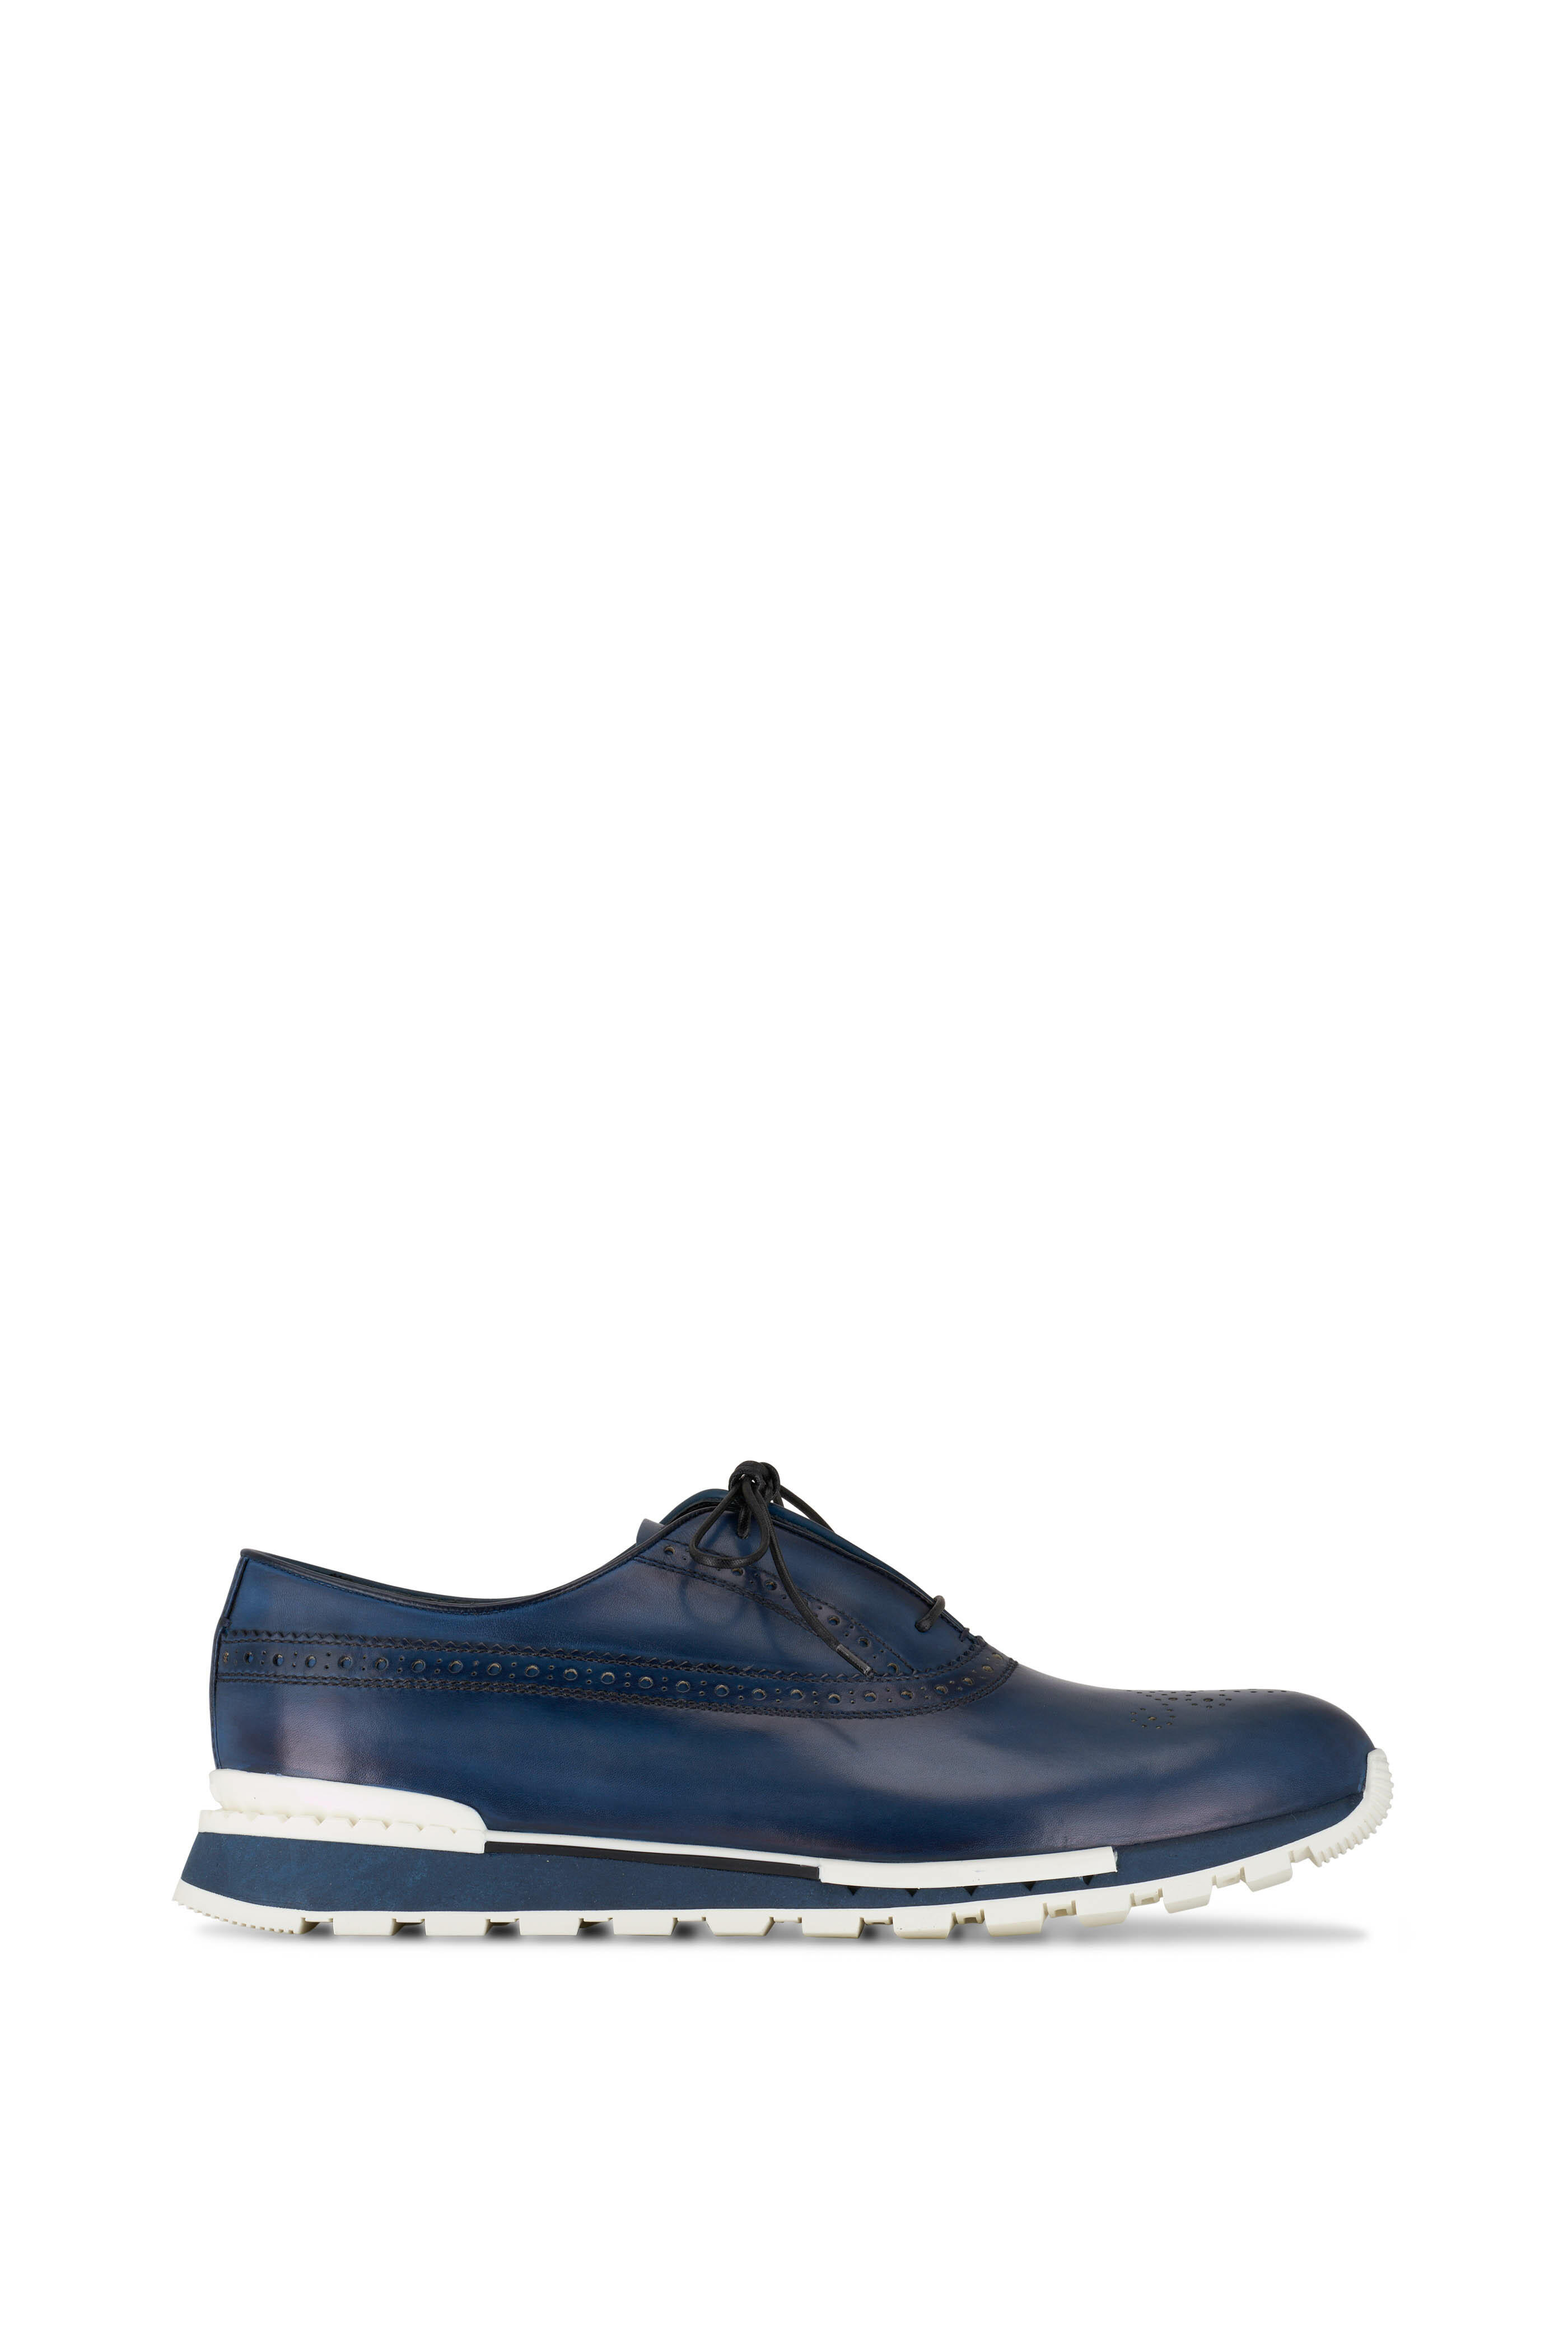 Berluti - Fast Track Aviero Blue Leather Sneaker